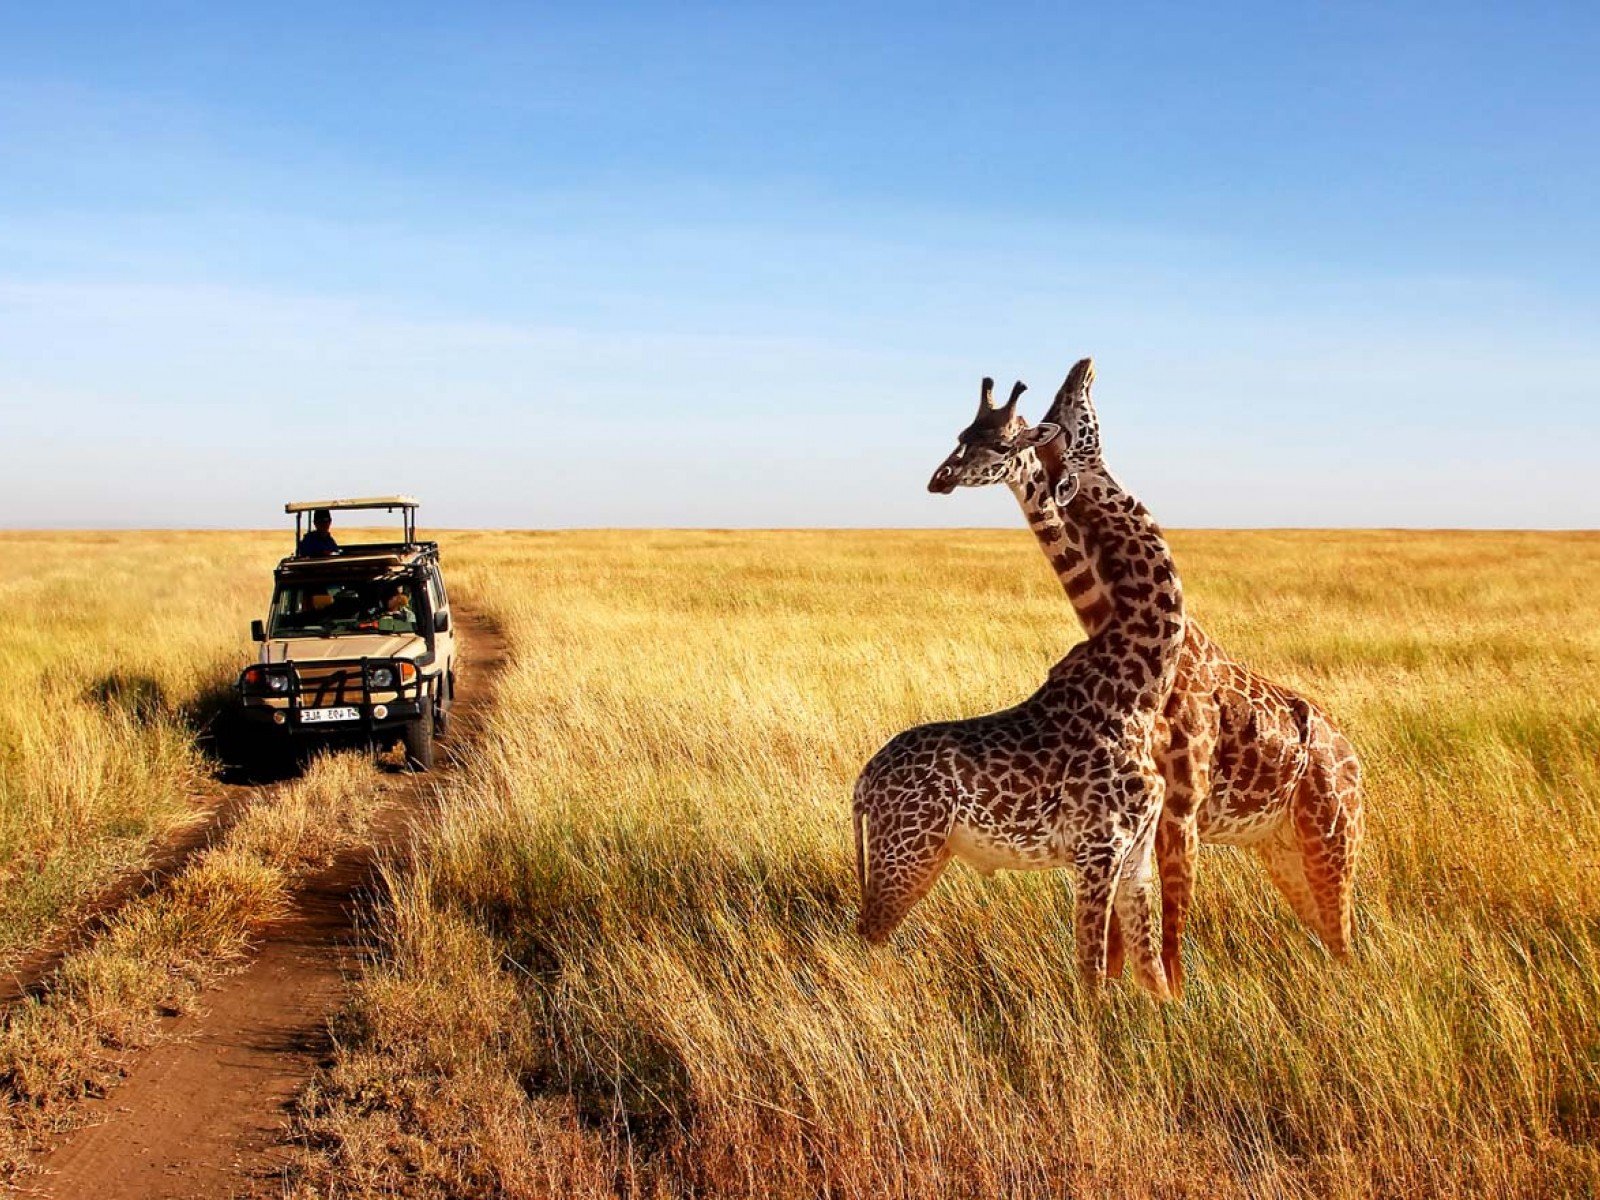 Achteruit Weggooien sponsor Tanzania Safari | 4Days Tanzania Budget Safari Packages - TripMyCity